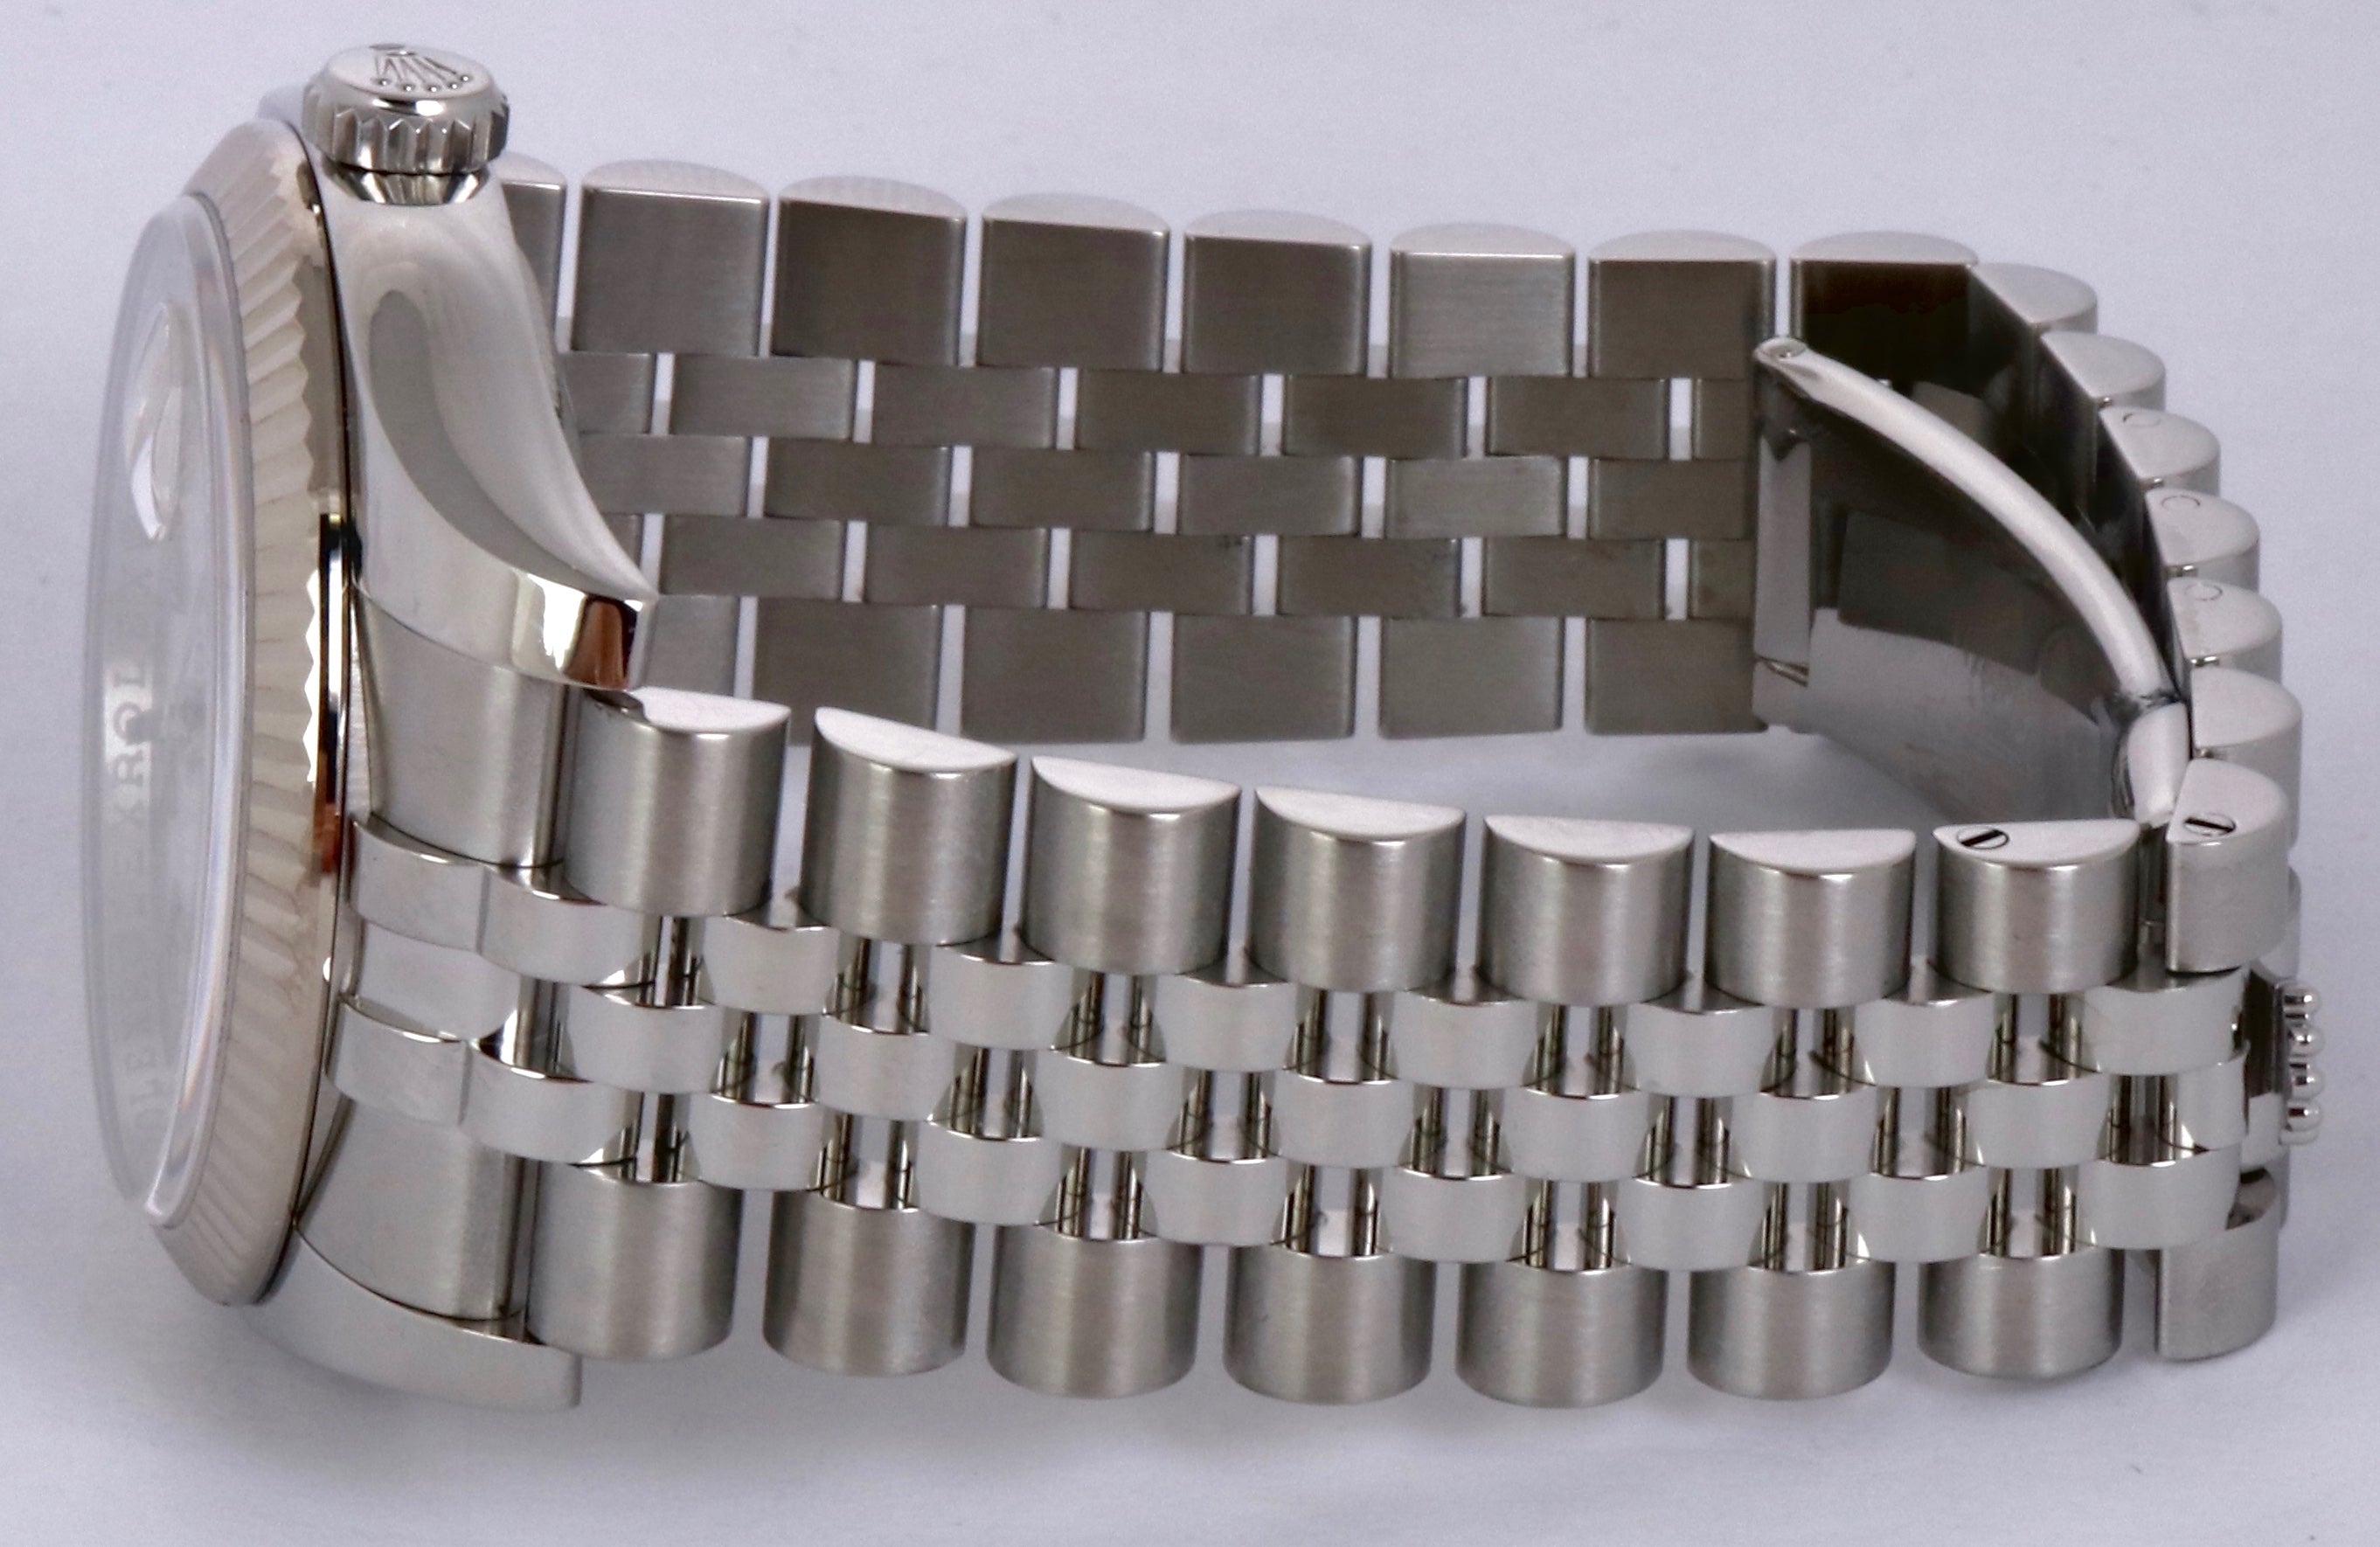 2012 Mint Rolex DateJust 116234 36mm White Roman Numeral Jubilee Date Watch